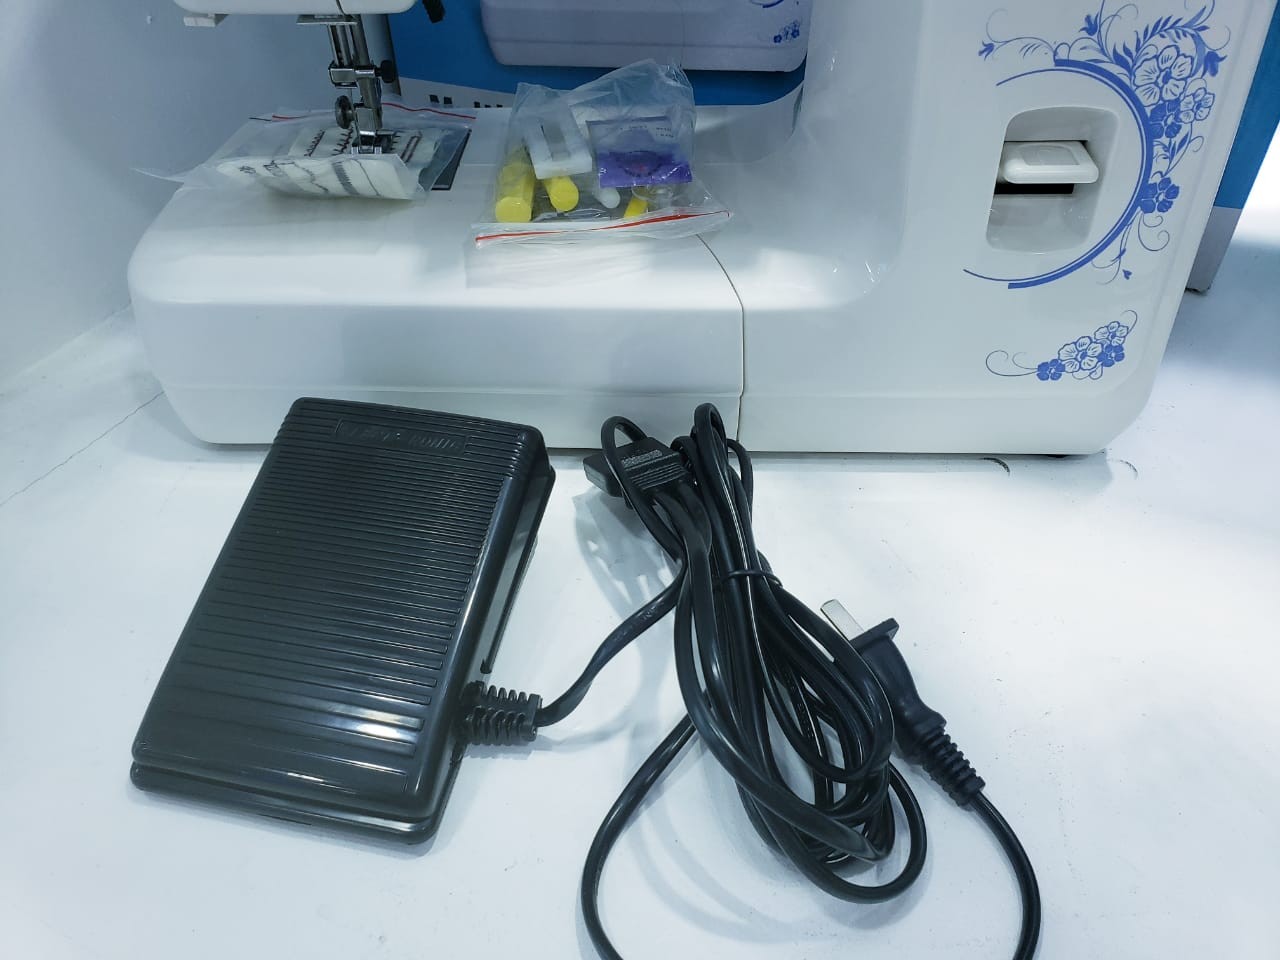 electrodomesticos - Maquina de coser Electrica multifuncional profesional JUKKY FH6224 1